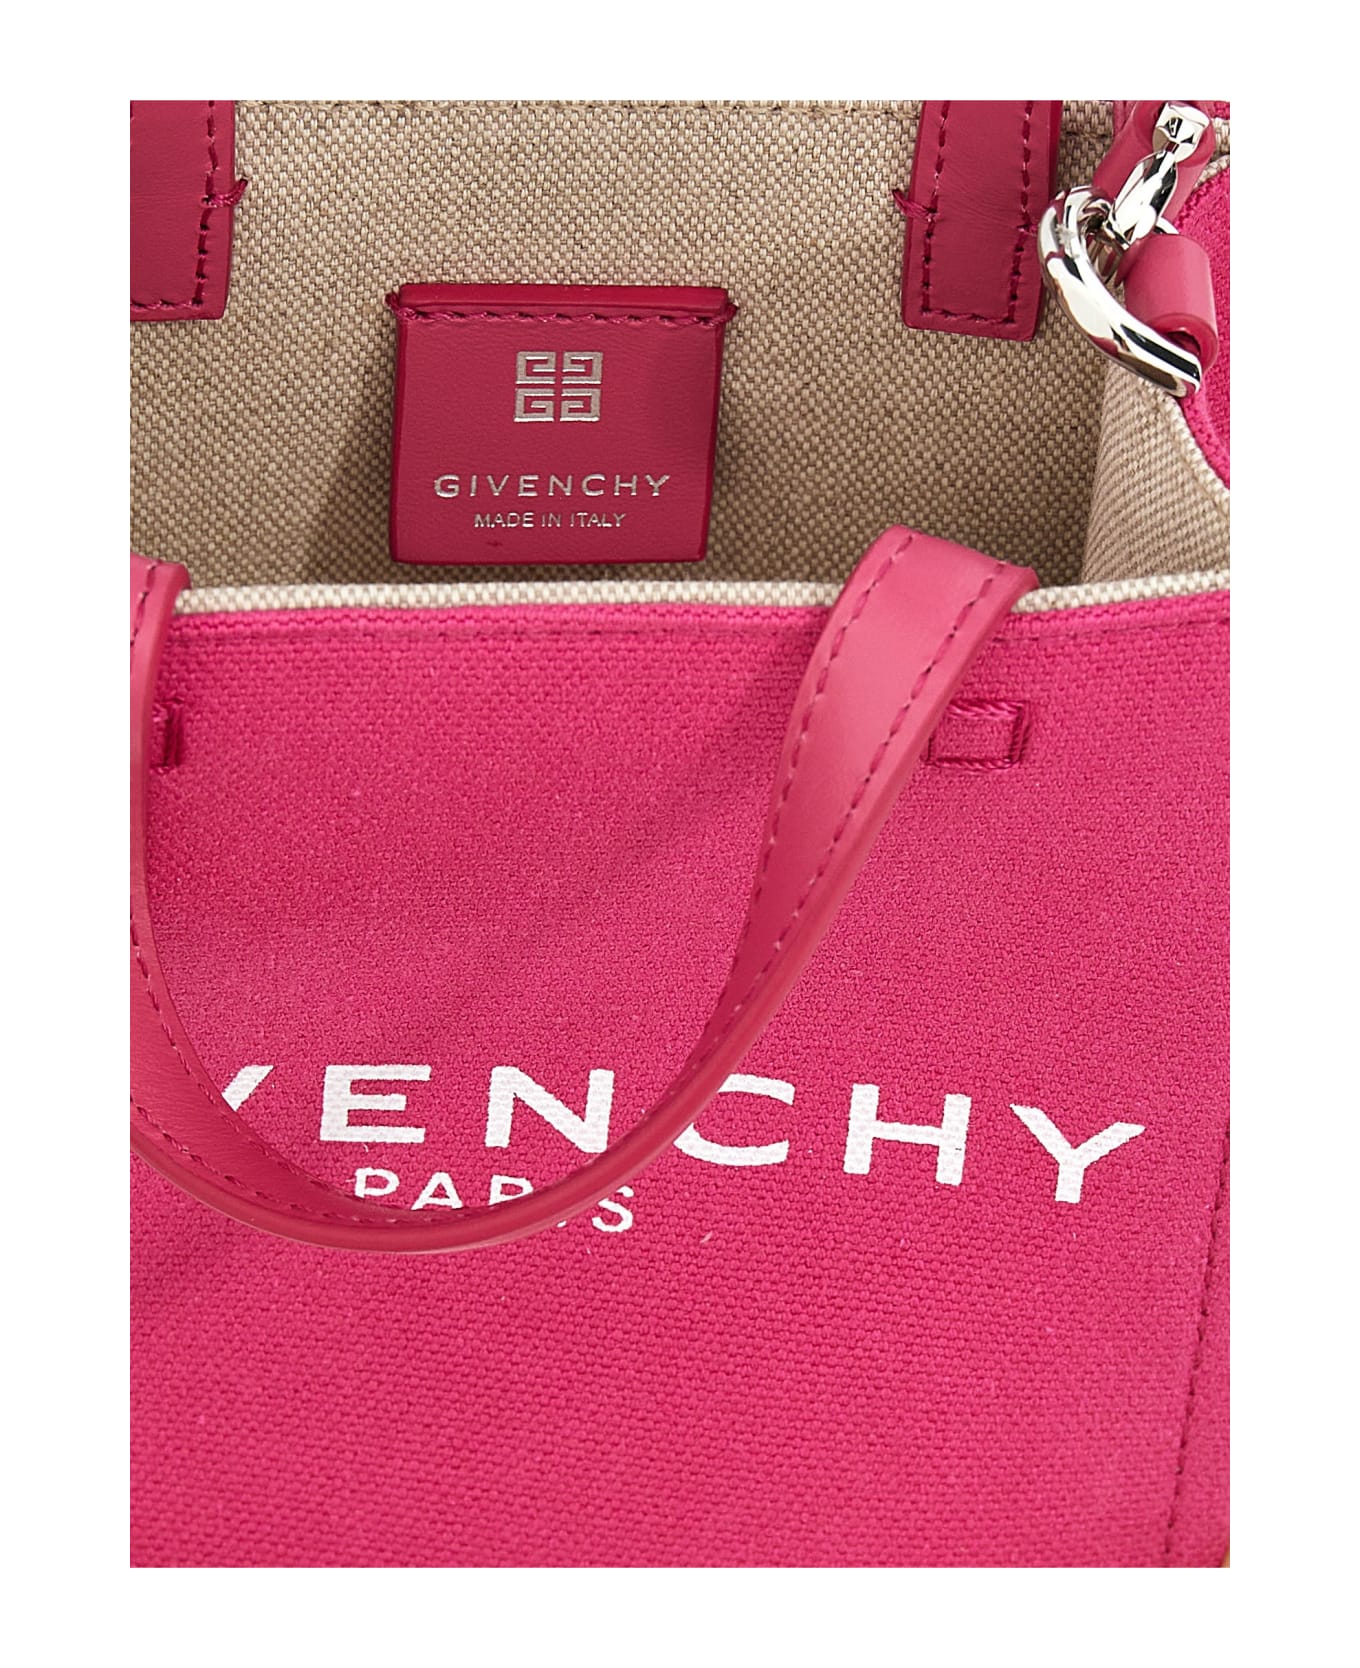 Givenchy G Tote Mini Handbag - Fuchsia